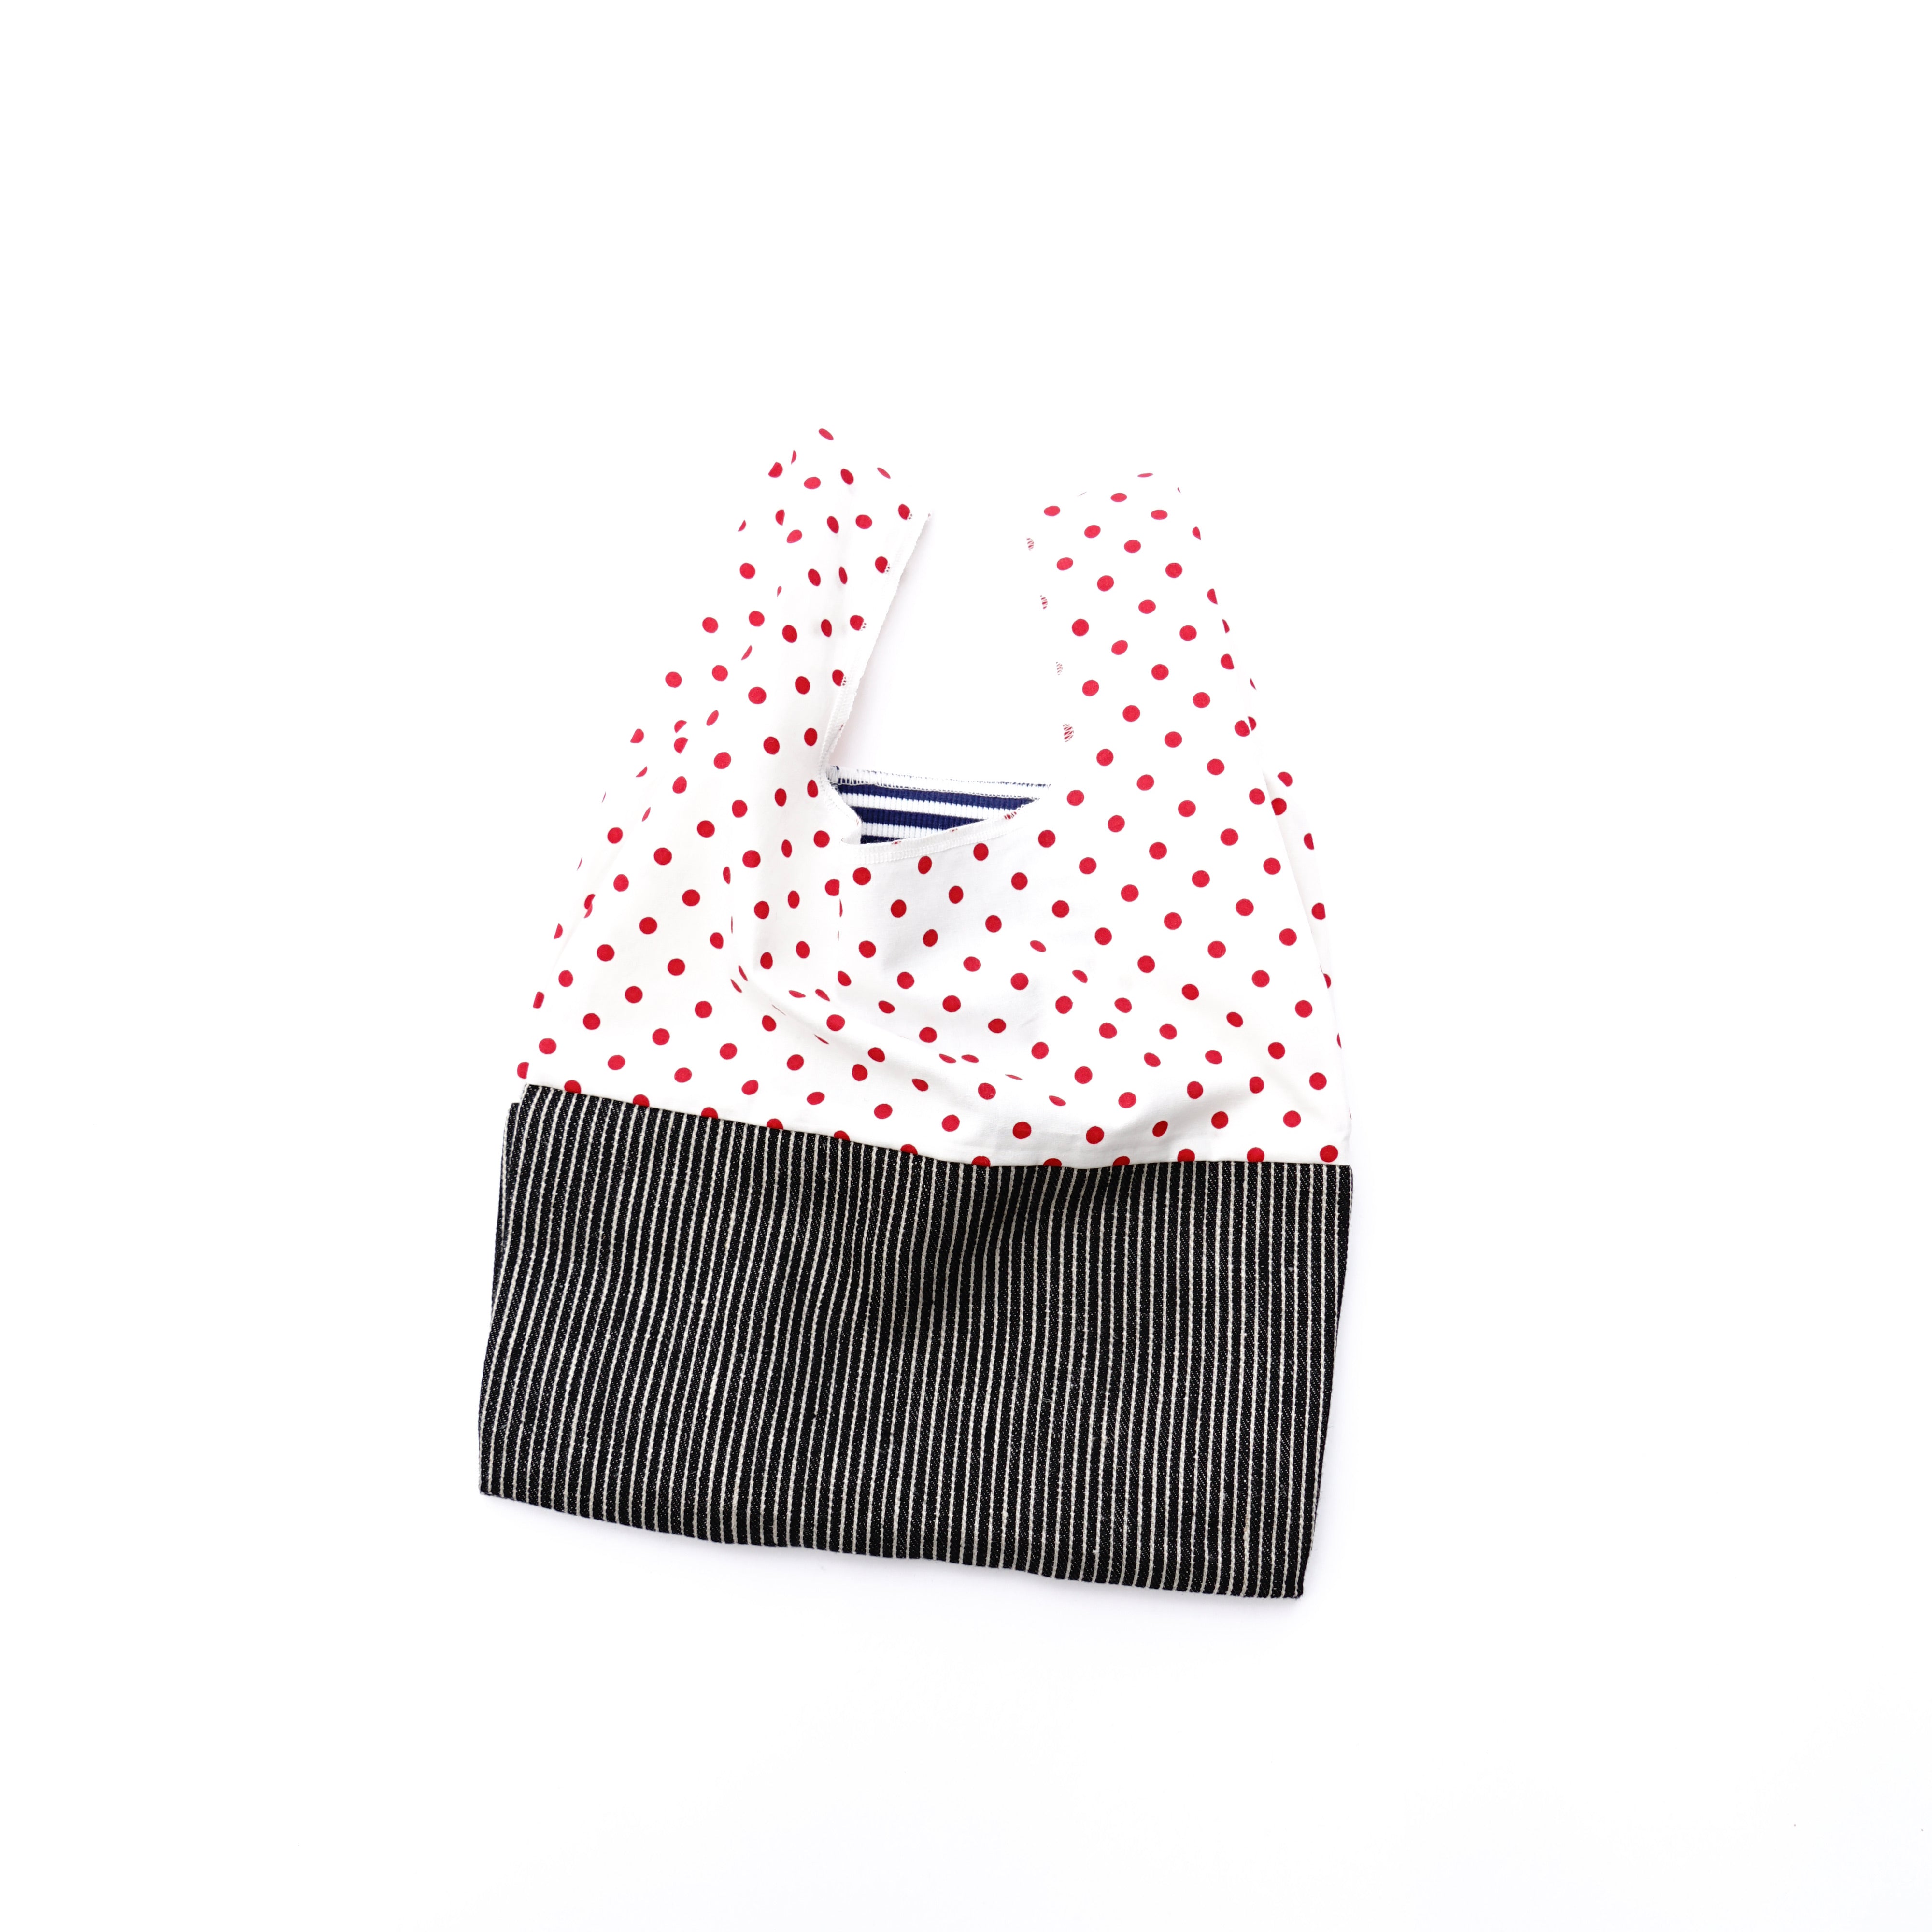 Lunch box bag　polka dots red / 202101ECO10